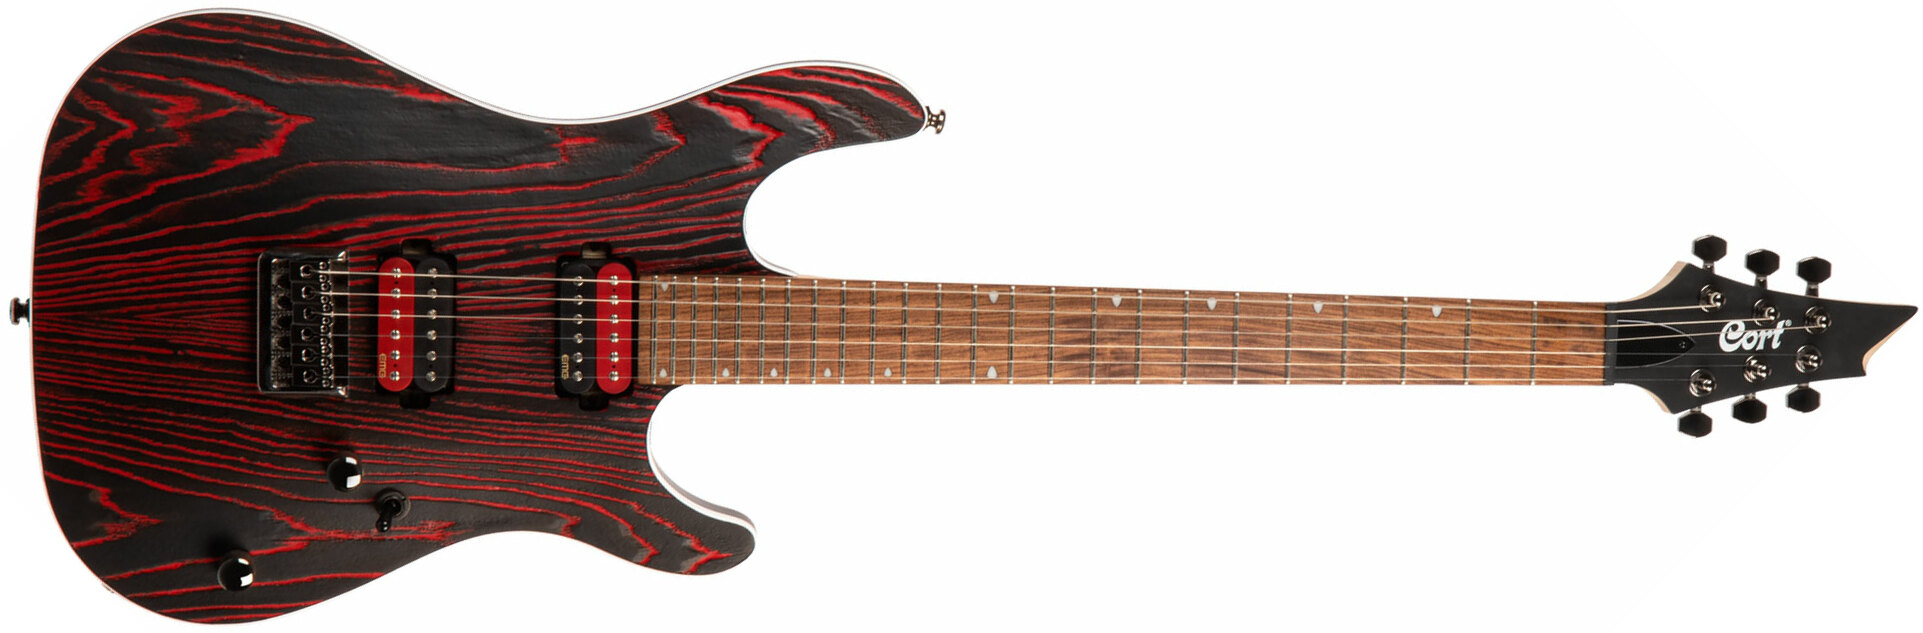 Cort Kx300 Ebr Hh Emg Ht Jat - Etched Black Red - Guitarra eléctrica con forma de str. - Main picture